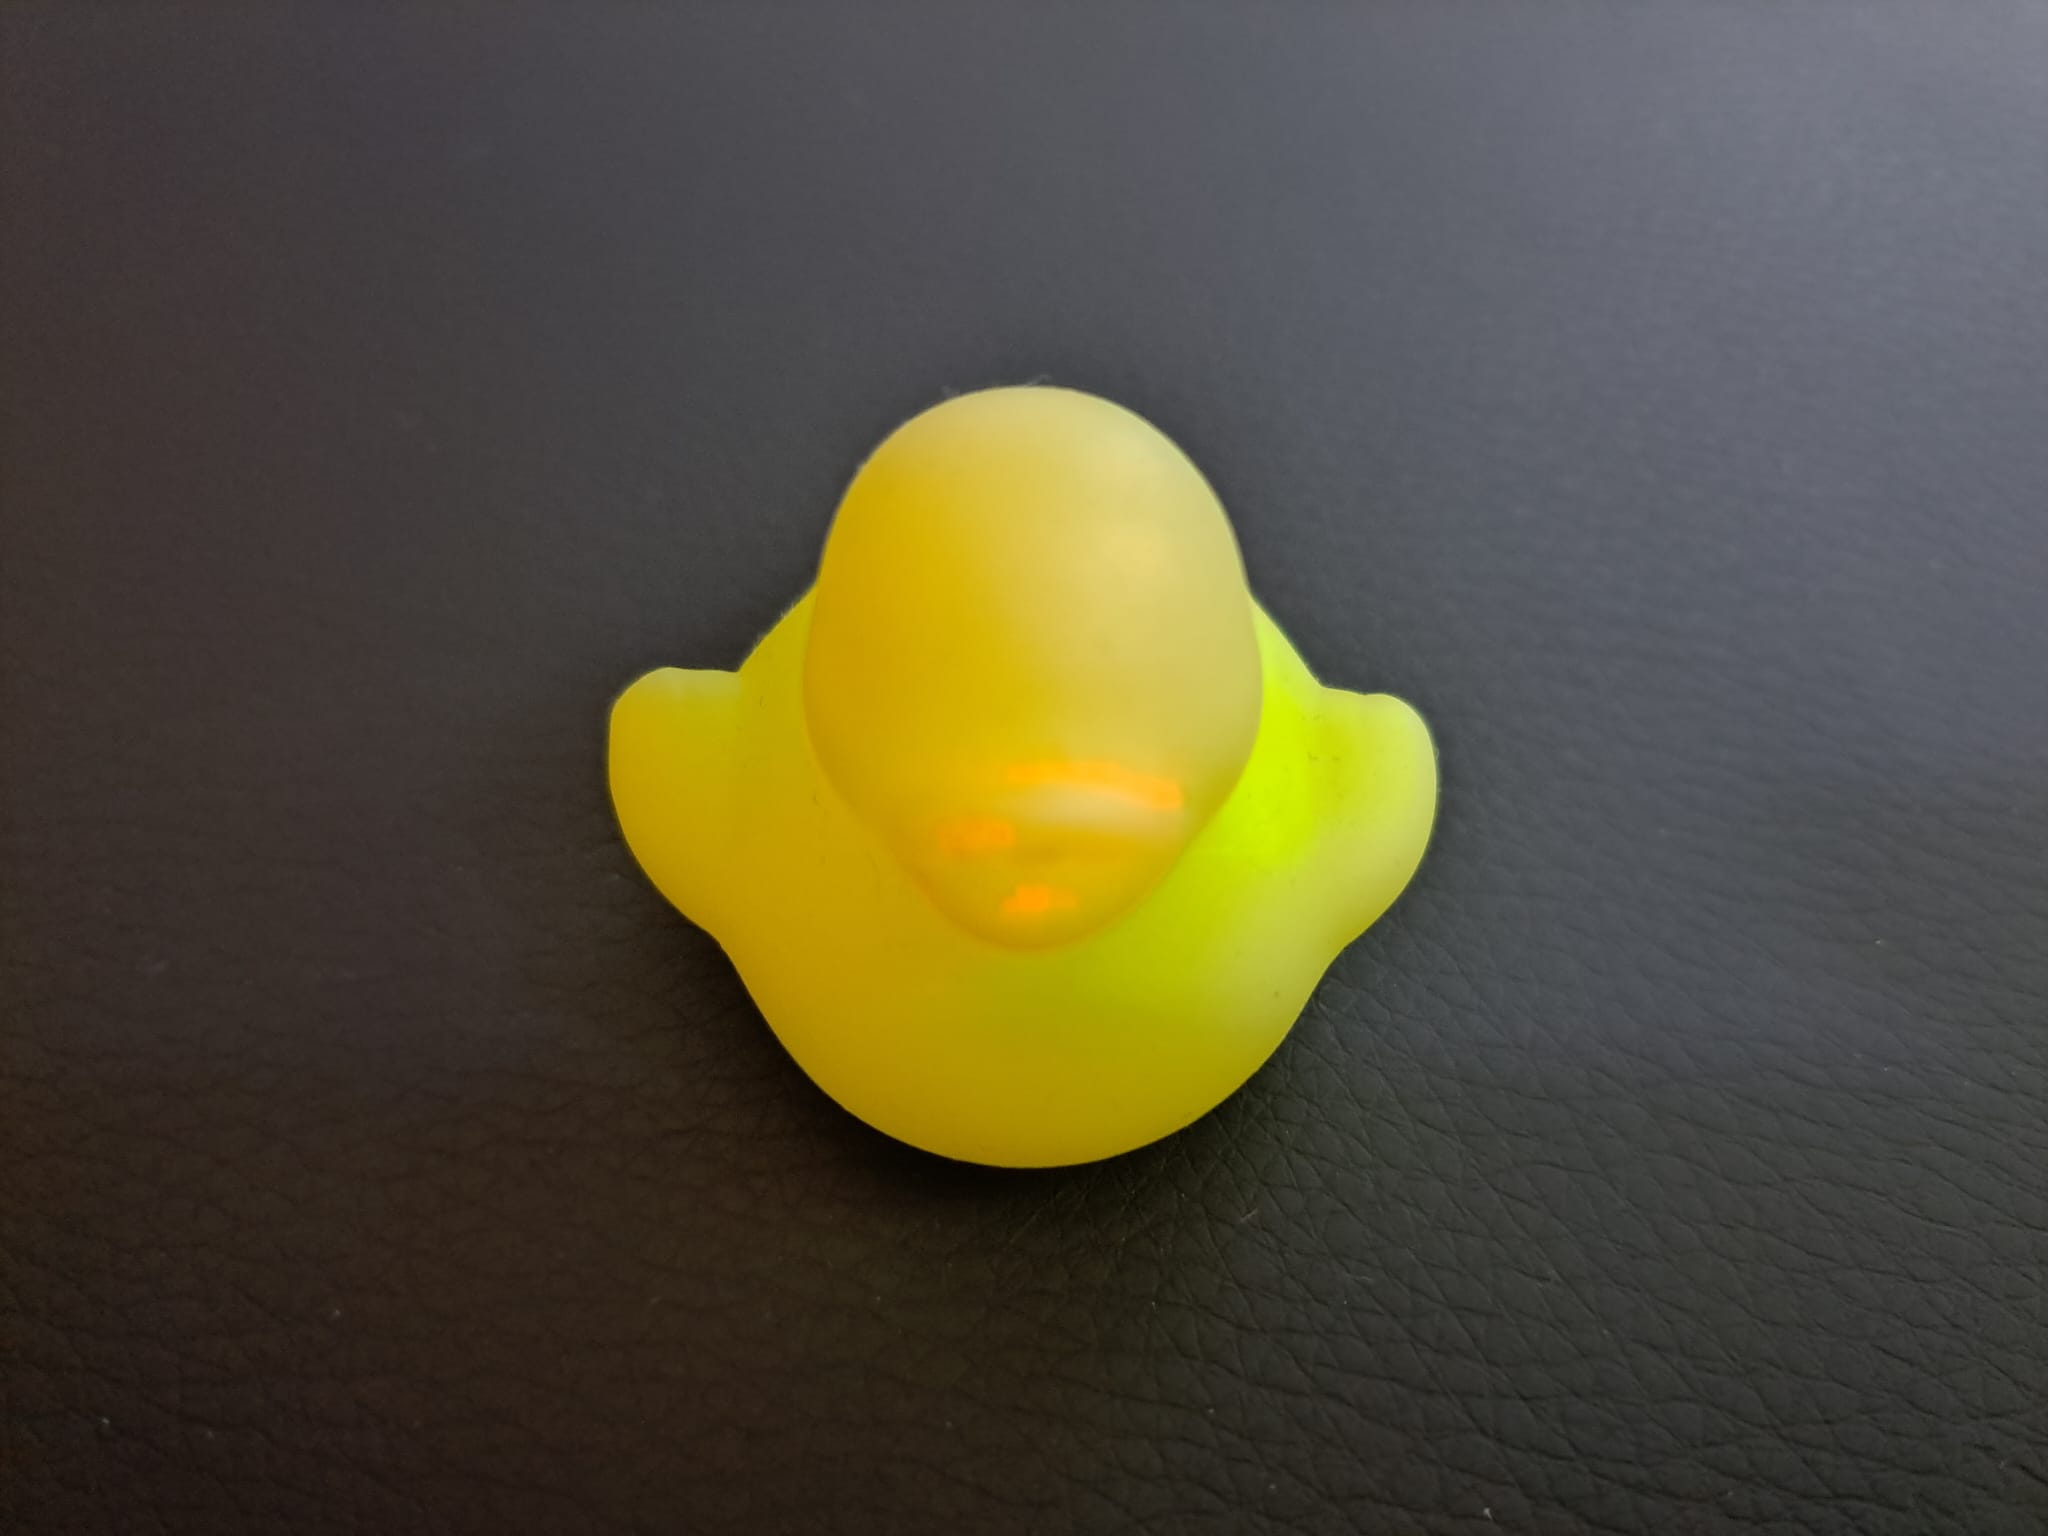 rubber ducky on a desk